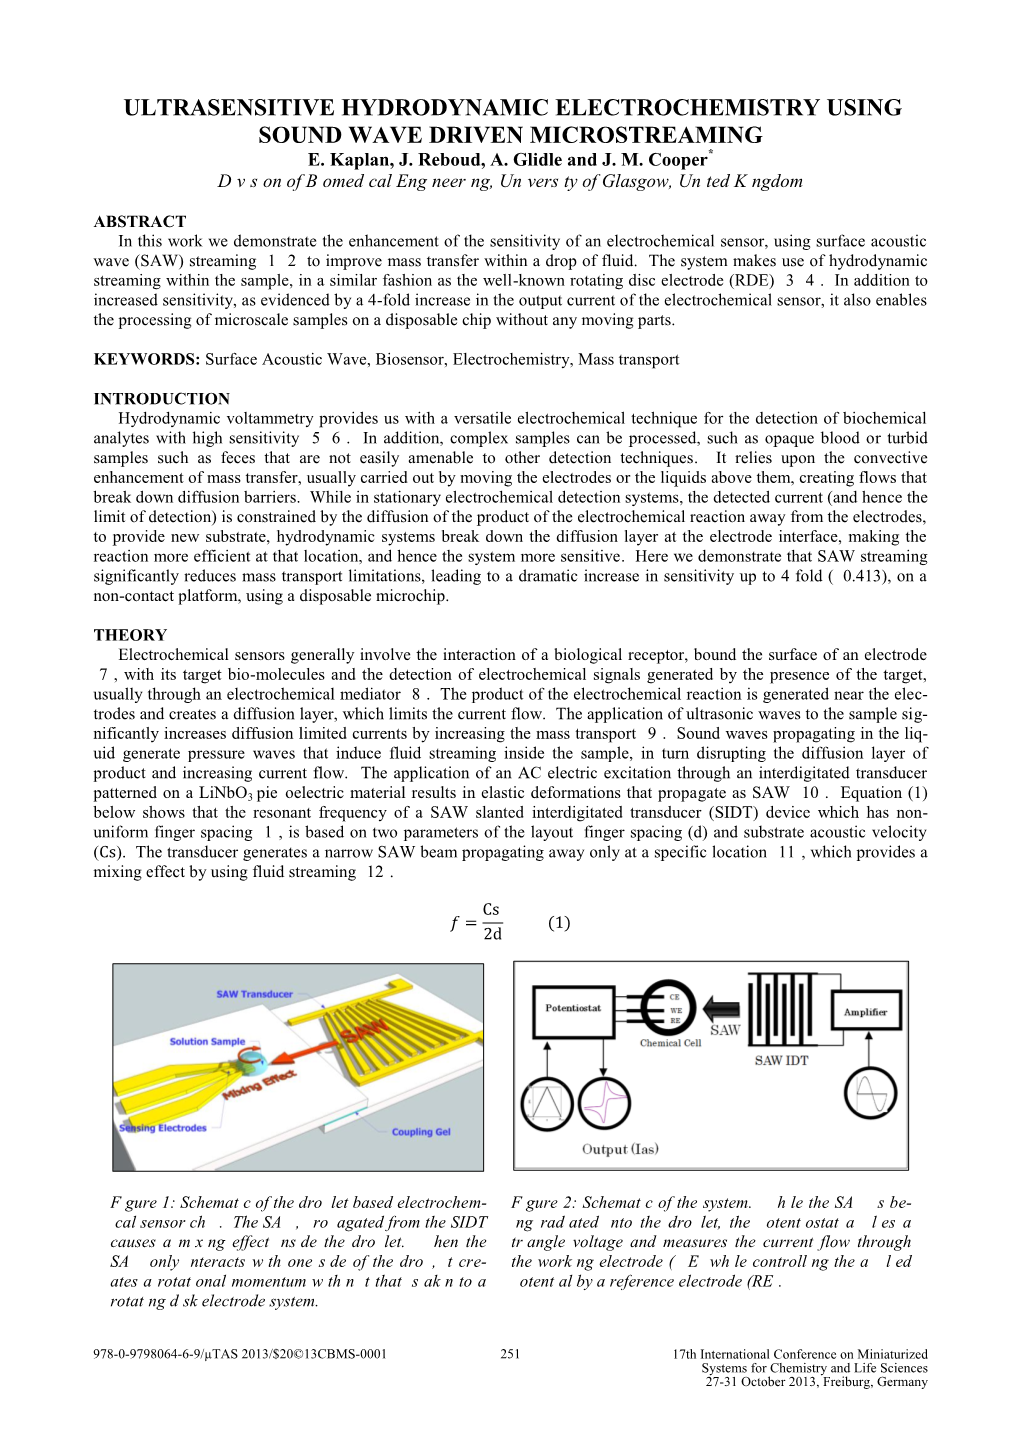 Ultrasensitive Hydrodynamic Electrochemistry Using Sound Wave Driven Microstreaming E